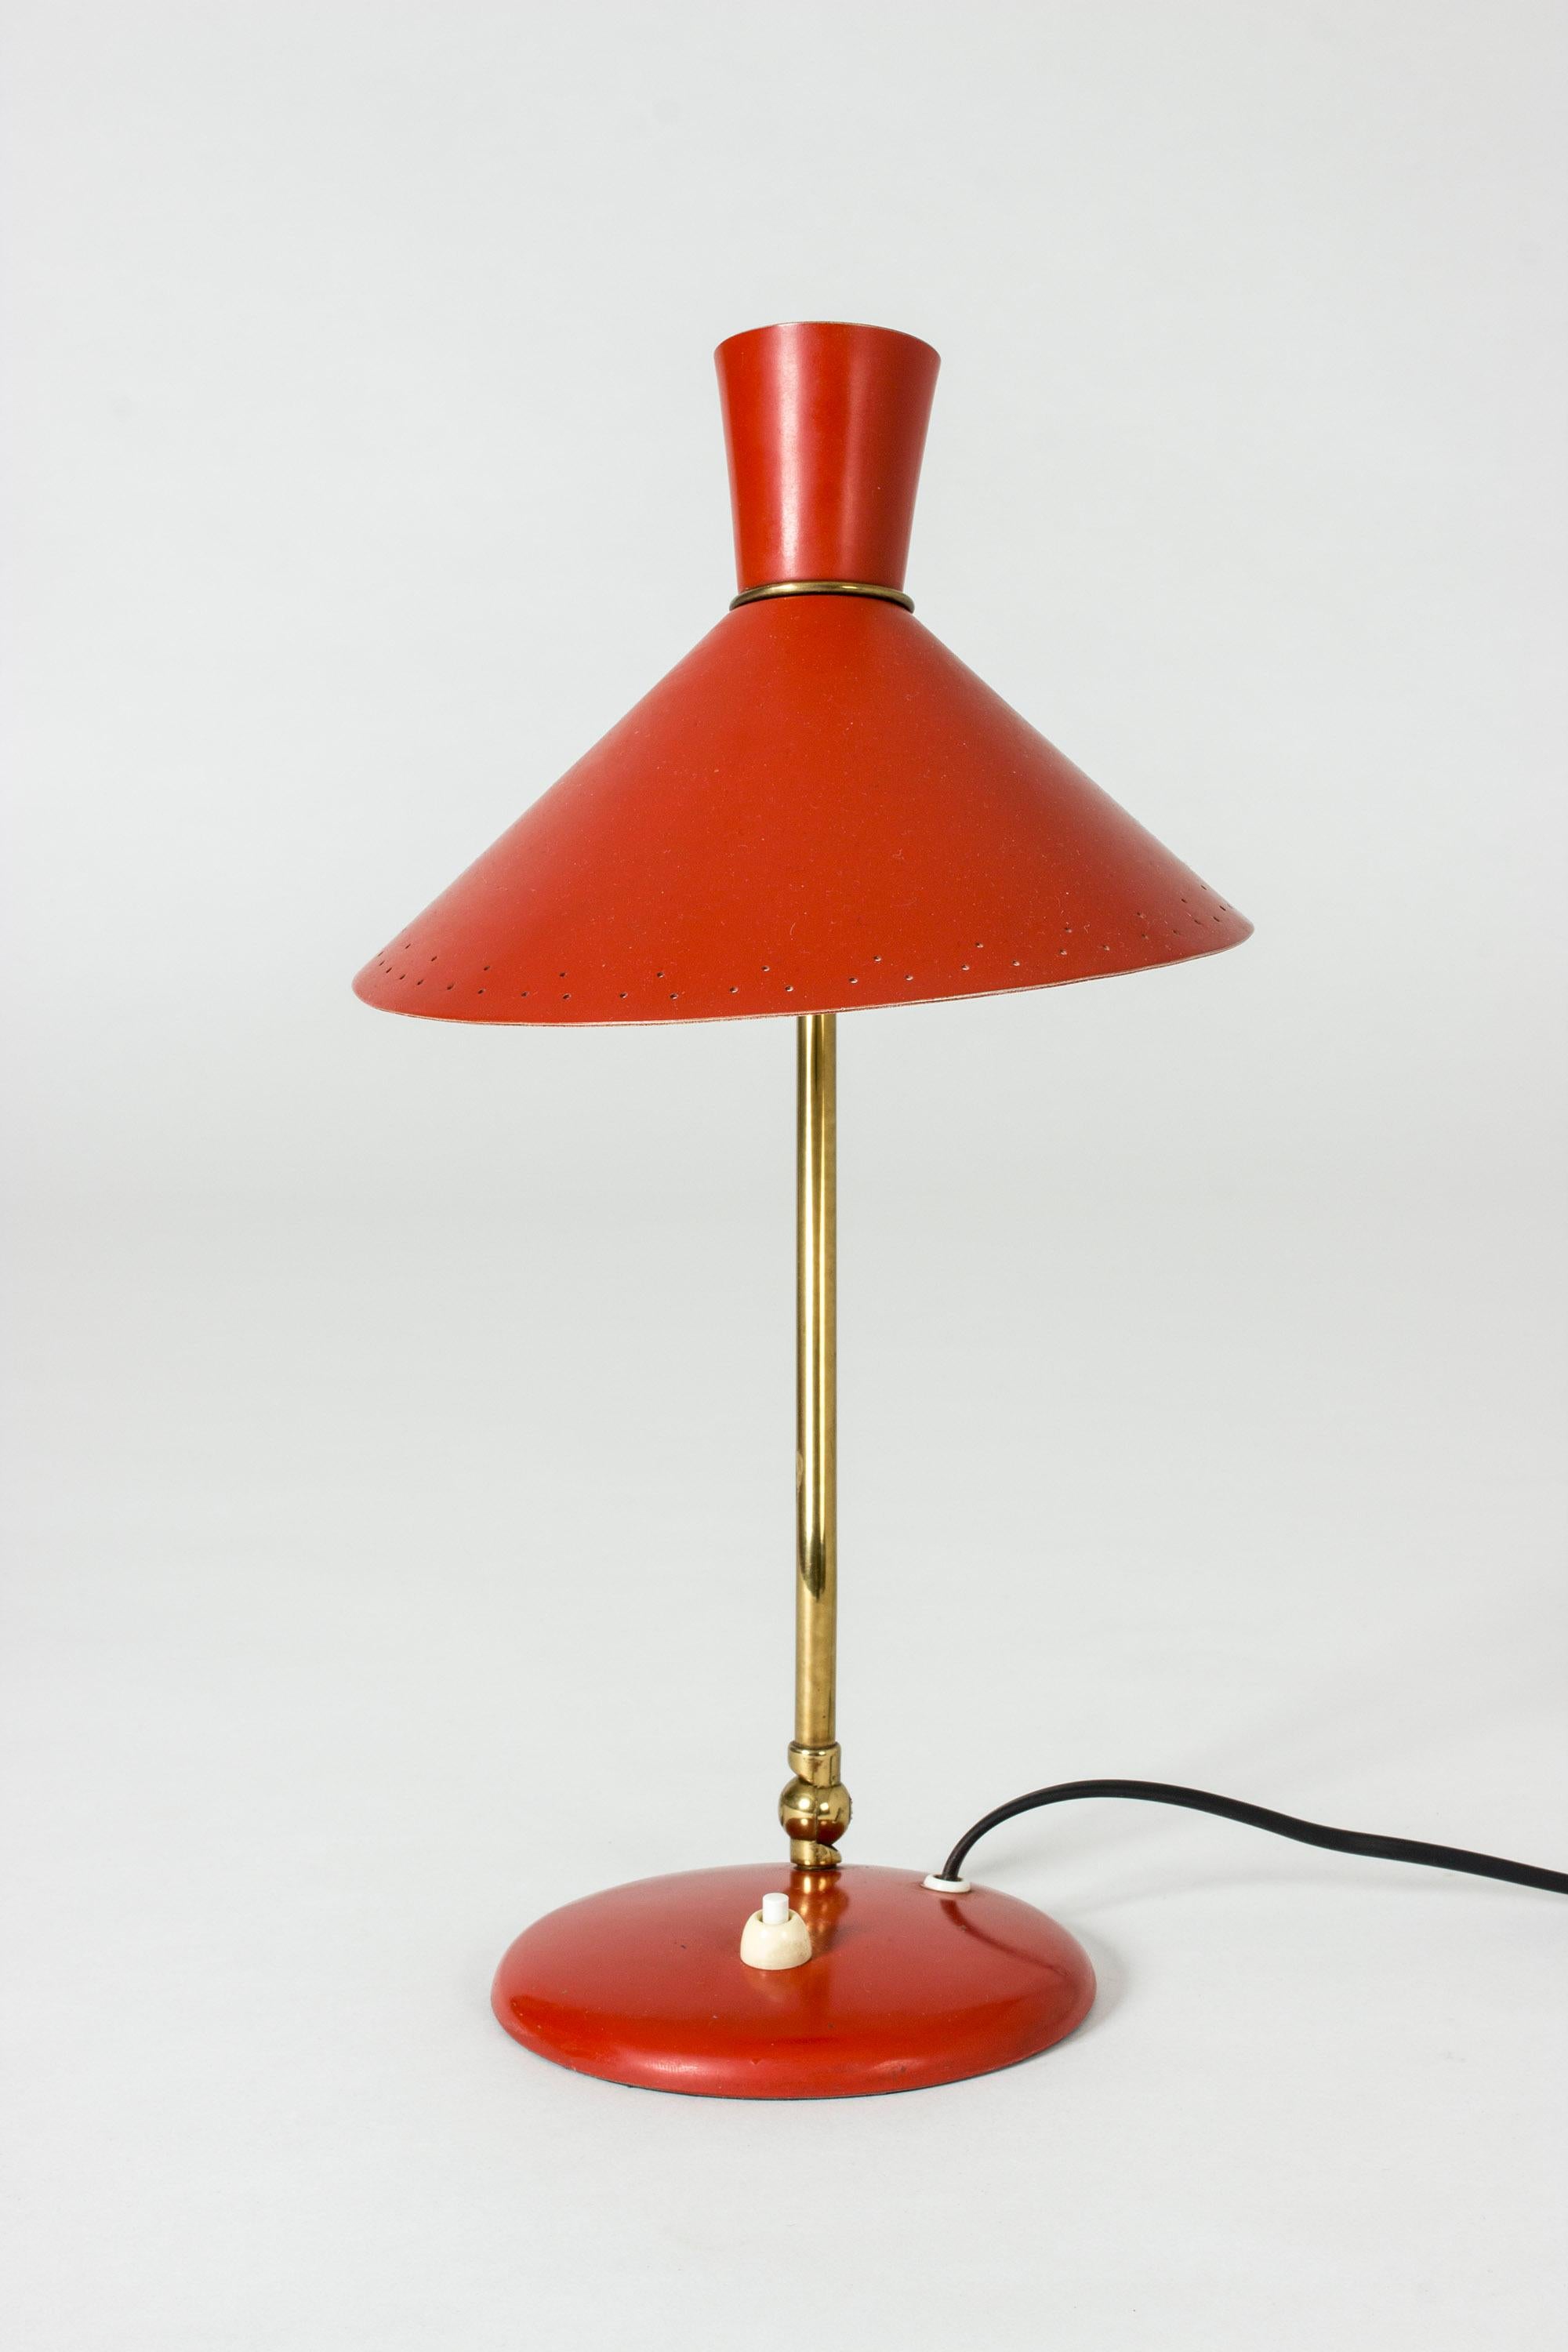 Scandinavian Modern Midcentury Desk Lamp by Svend Aage Holm Sørensen